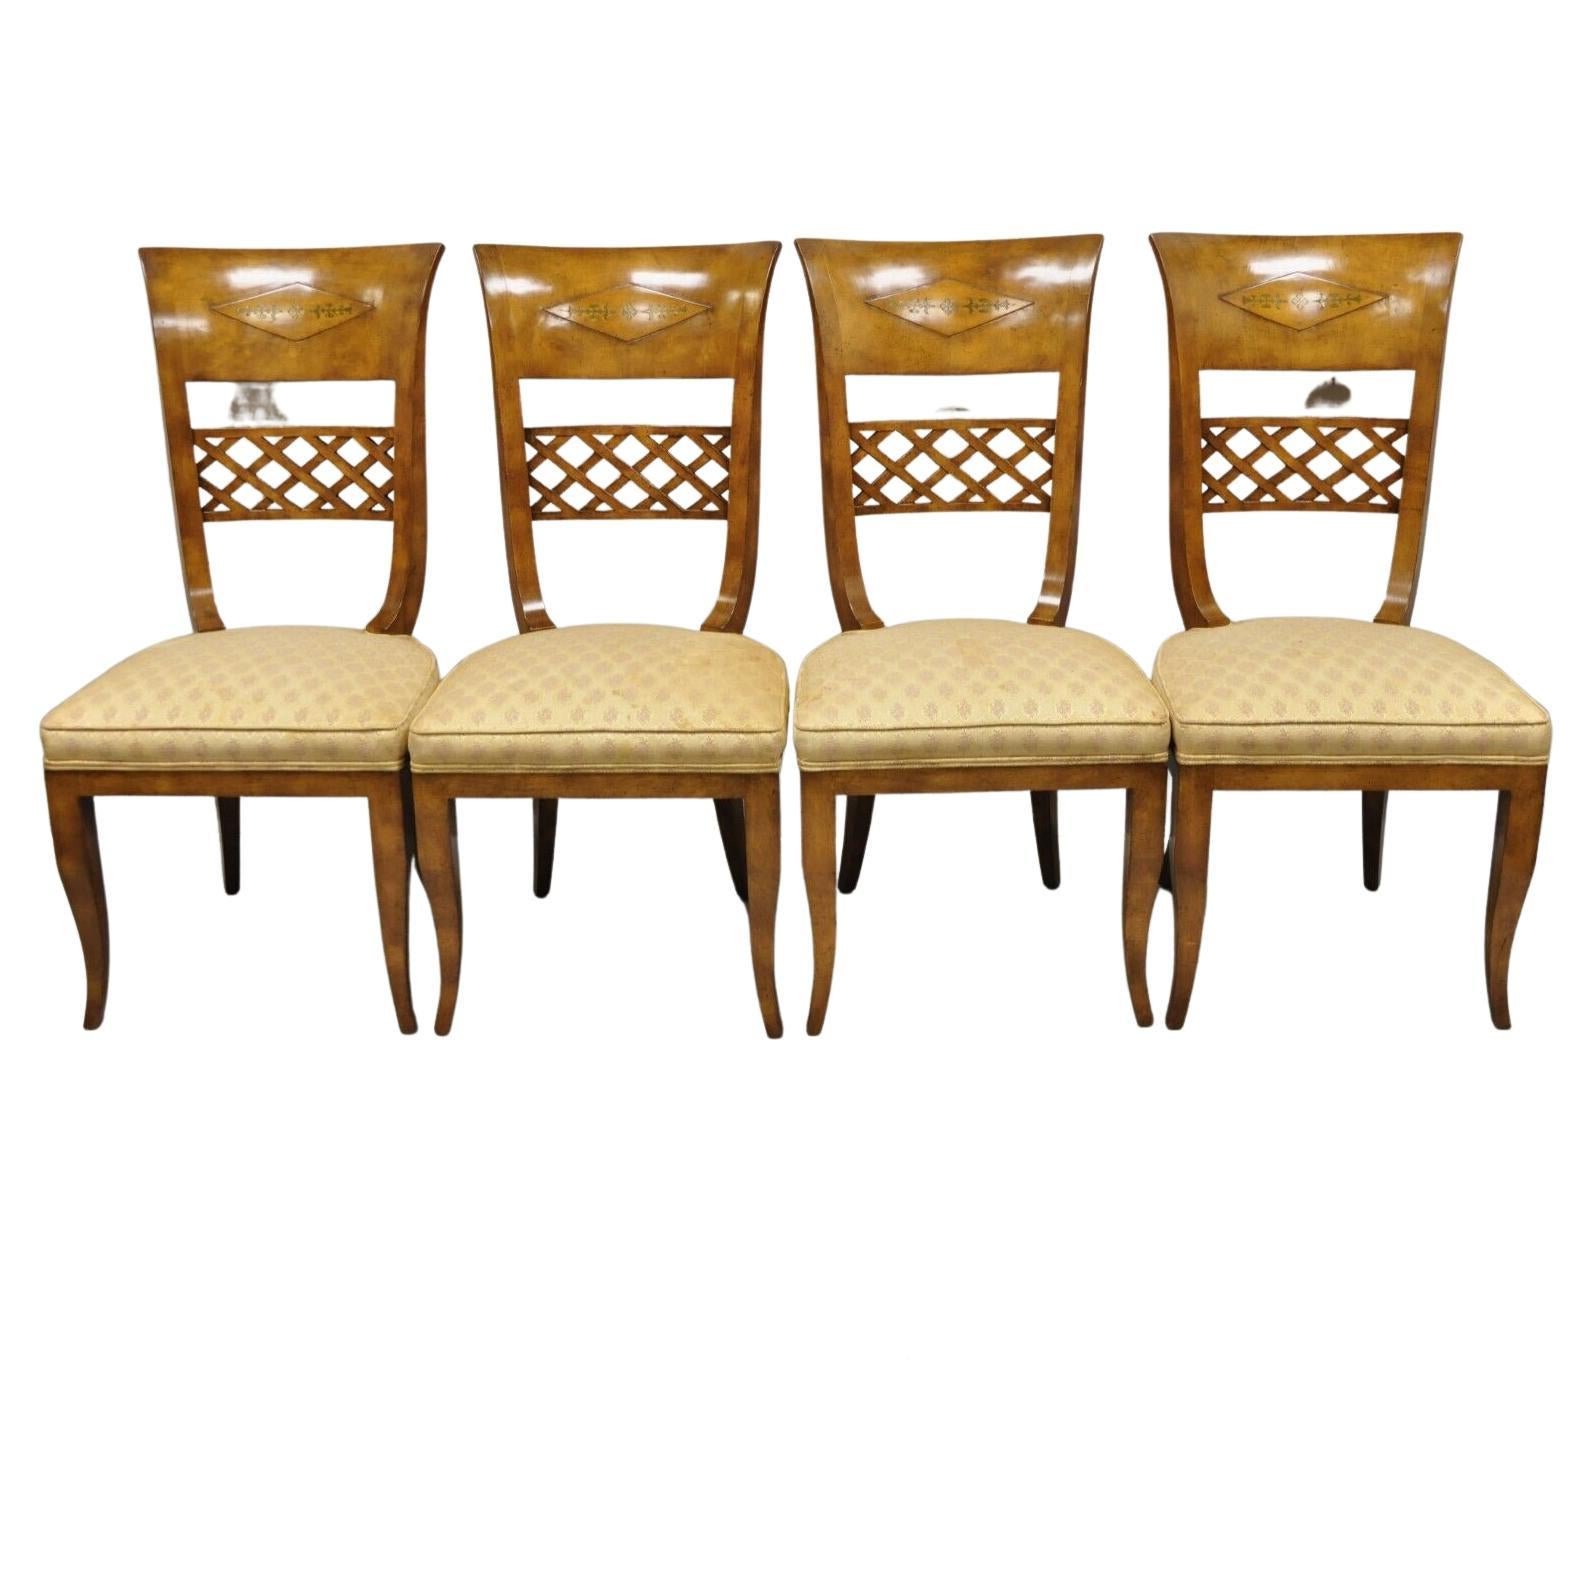 Italian Regency Style Burlwood Brass Inlay Tall Back Dining Chairs - Set of 4